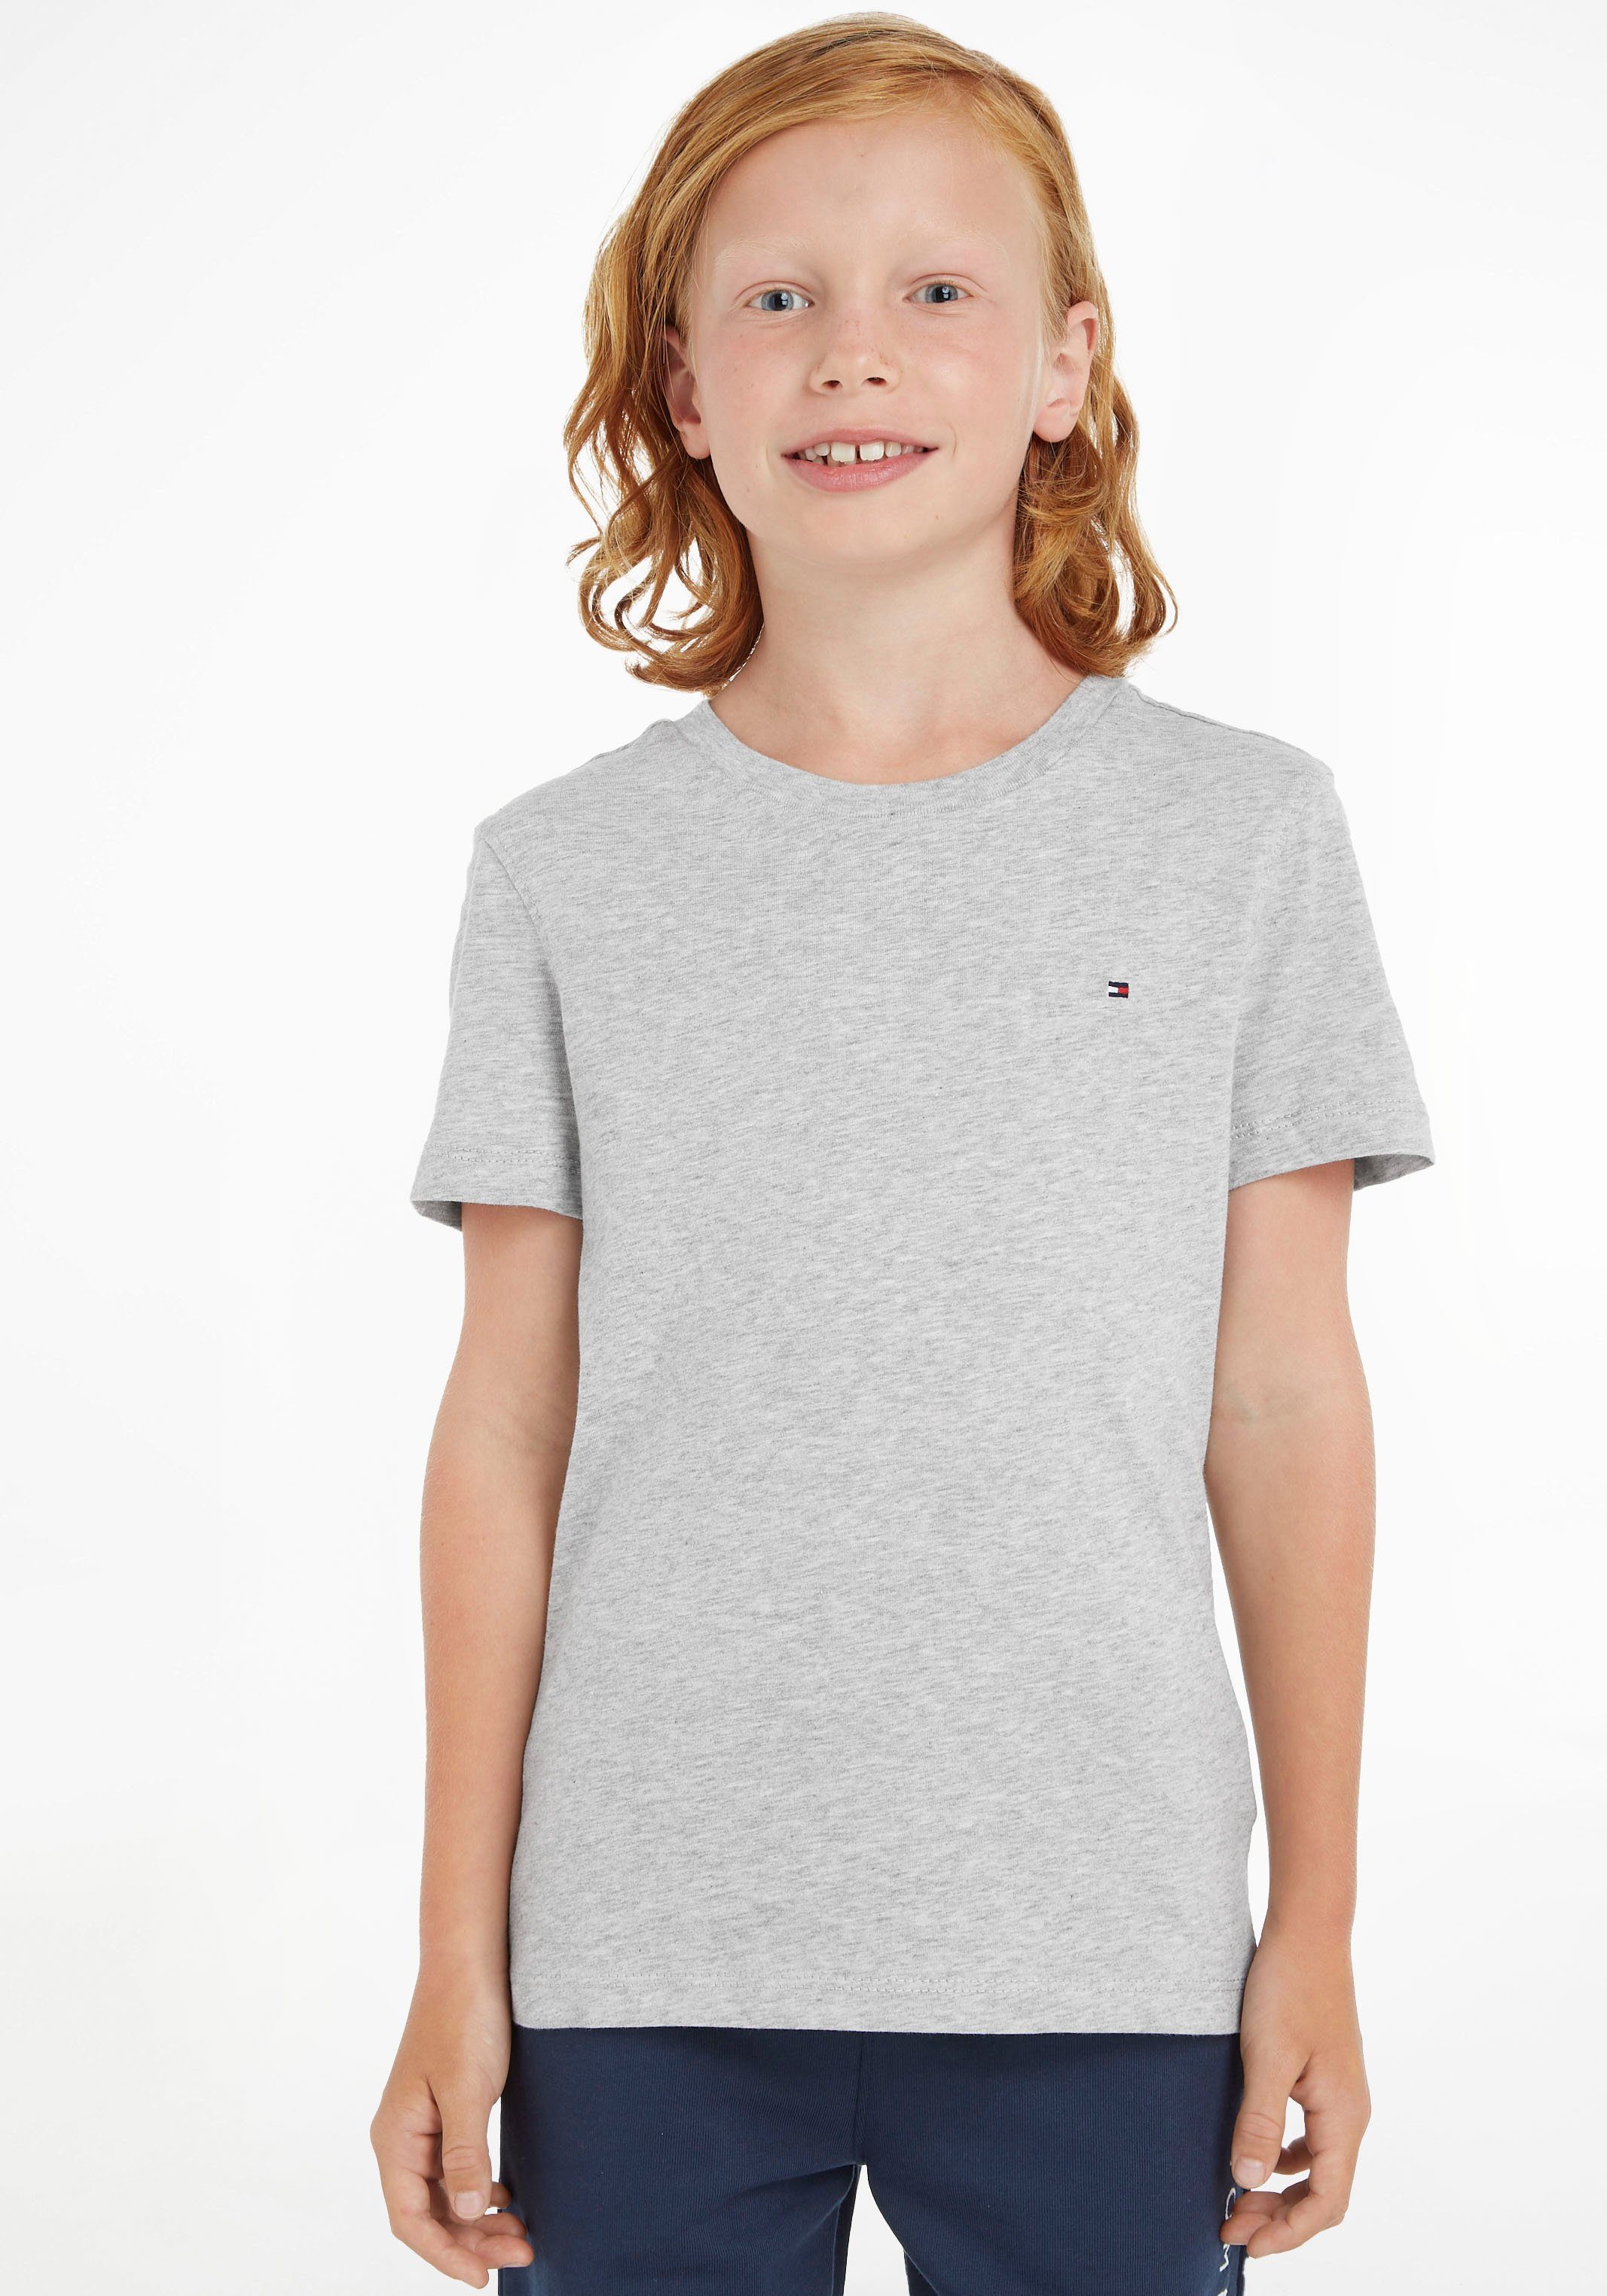 Kinder Tommy MiniMe BASIC BOYS Junior Hilfiger Kids KNIT T-Shirt CN